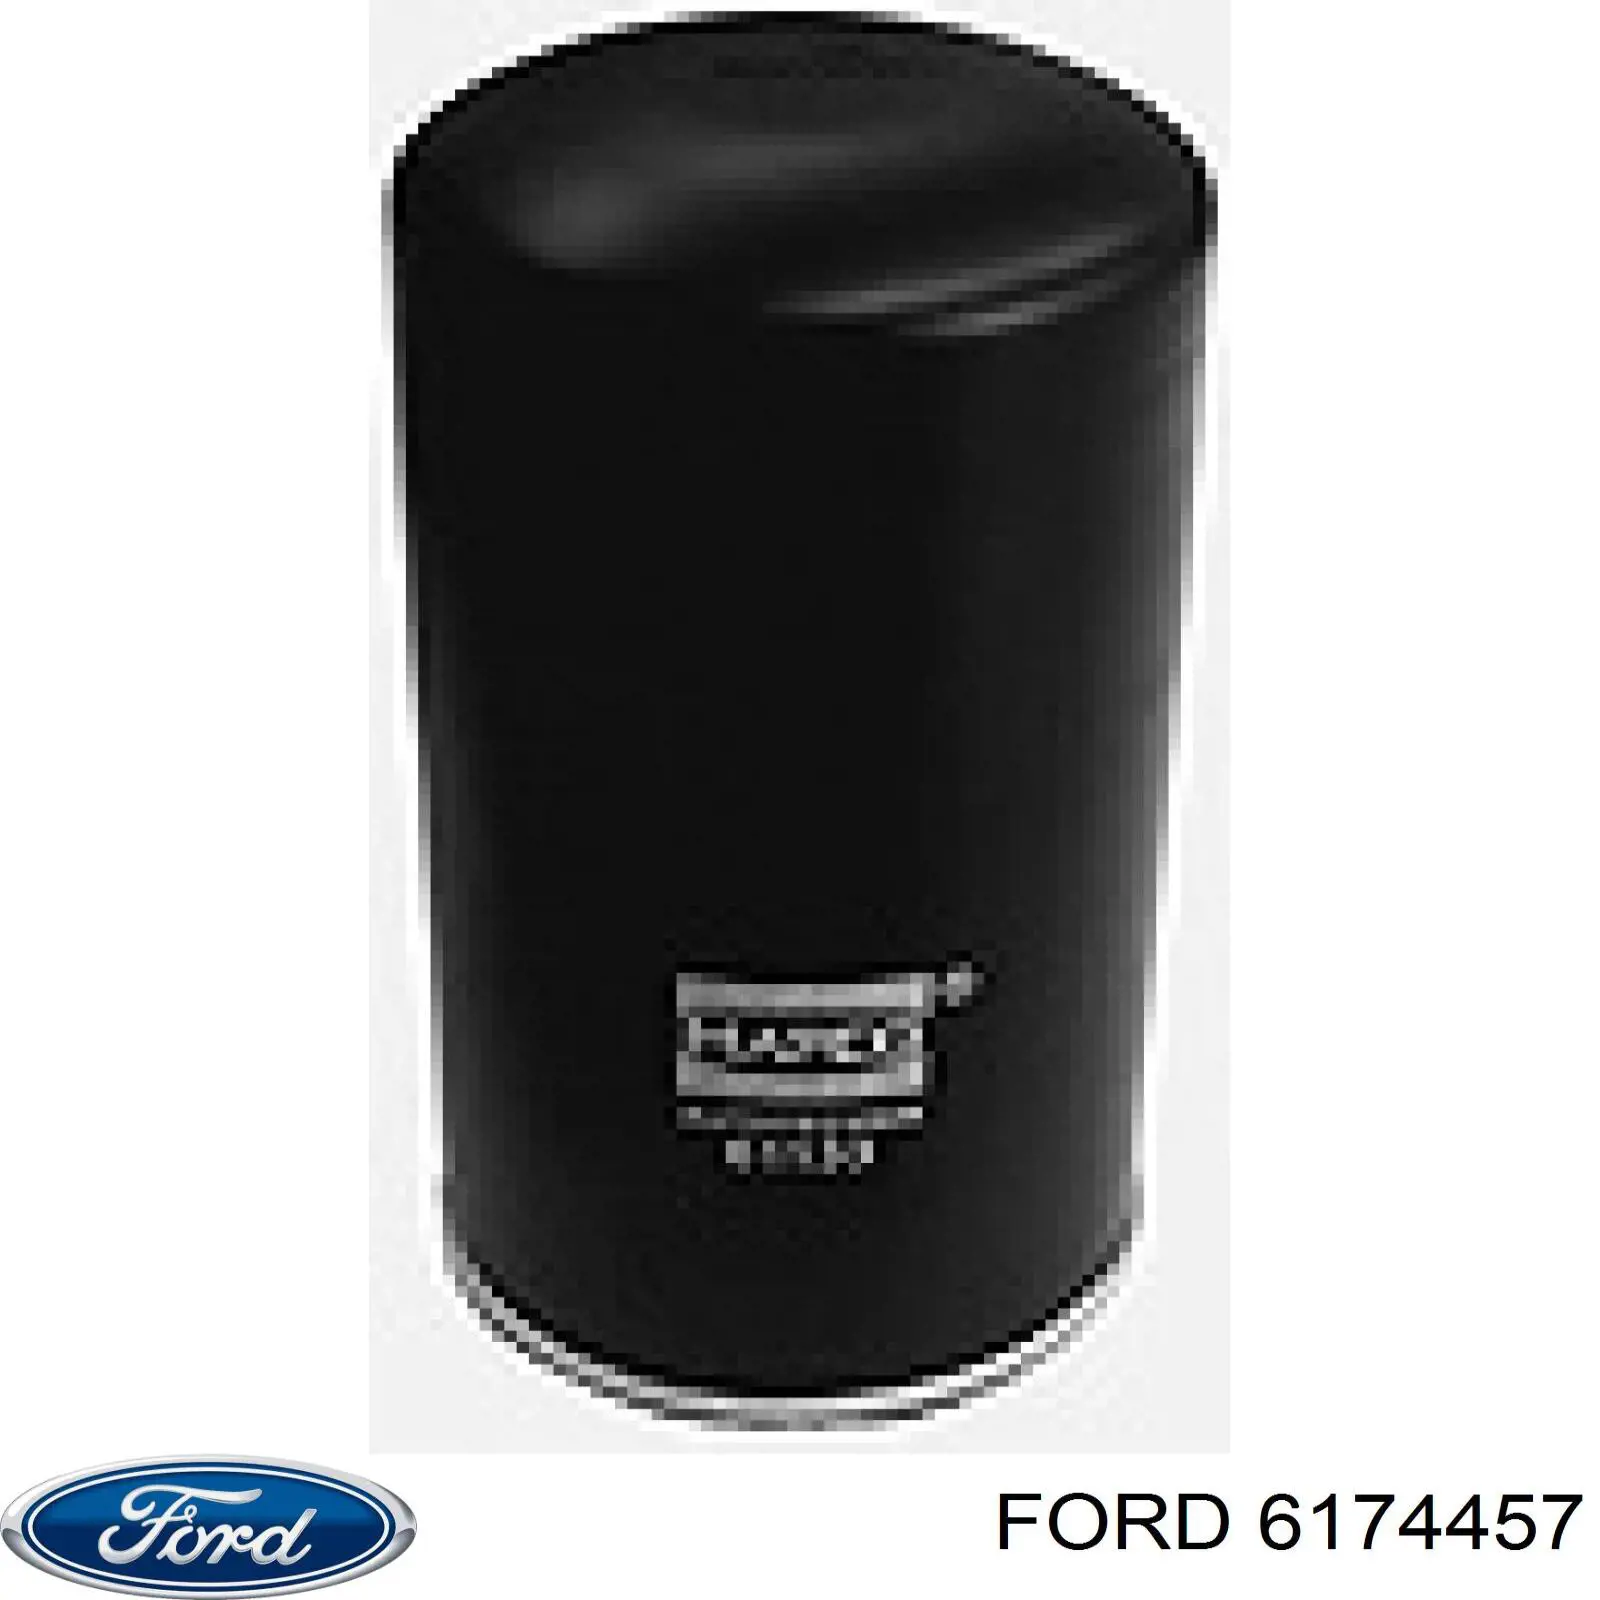 6174457 Ford filtro de aceite